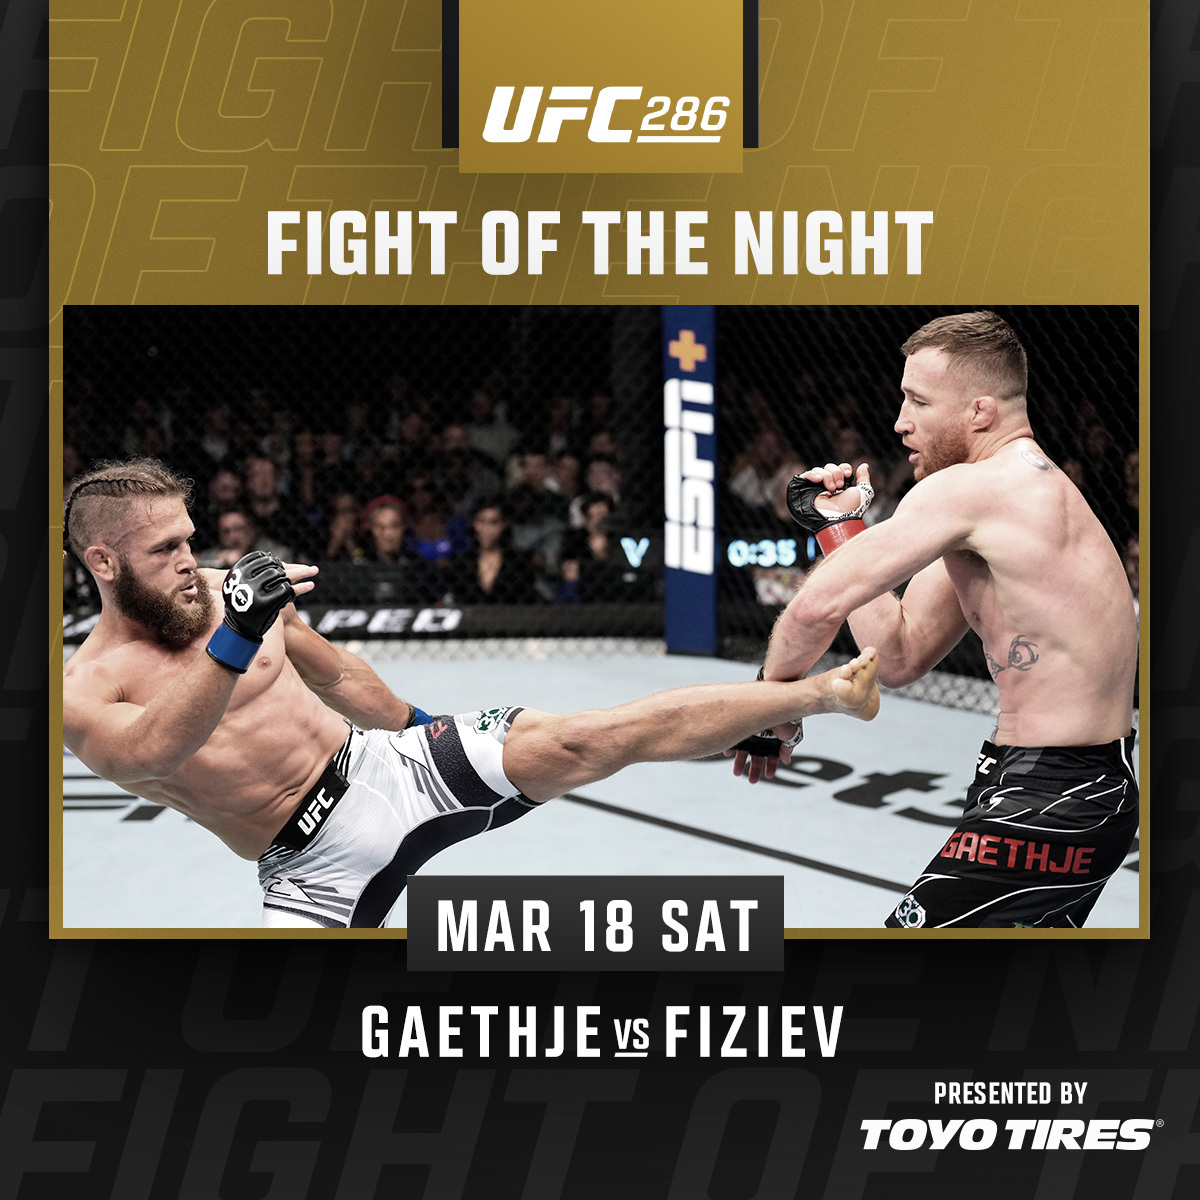 UFC 286 - Justin Gaethje vs Rafael Fiziev